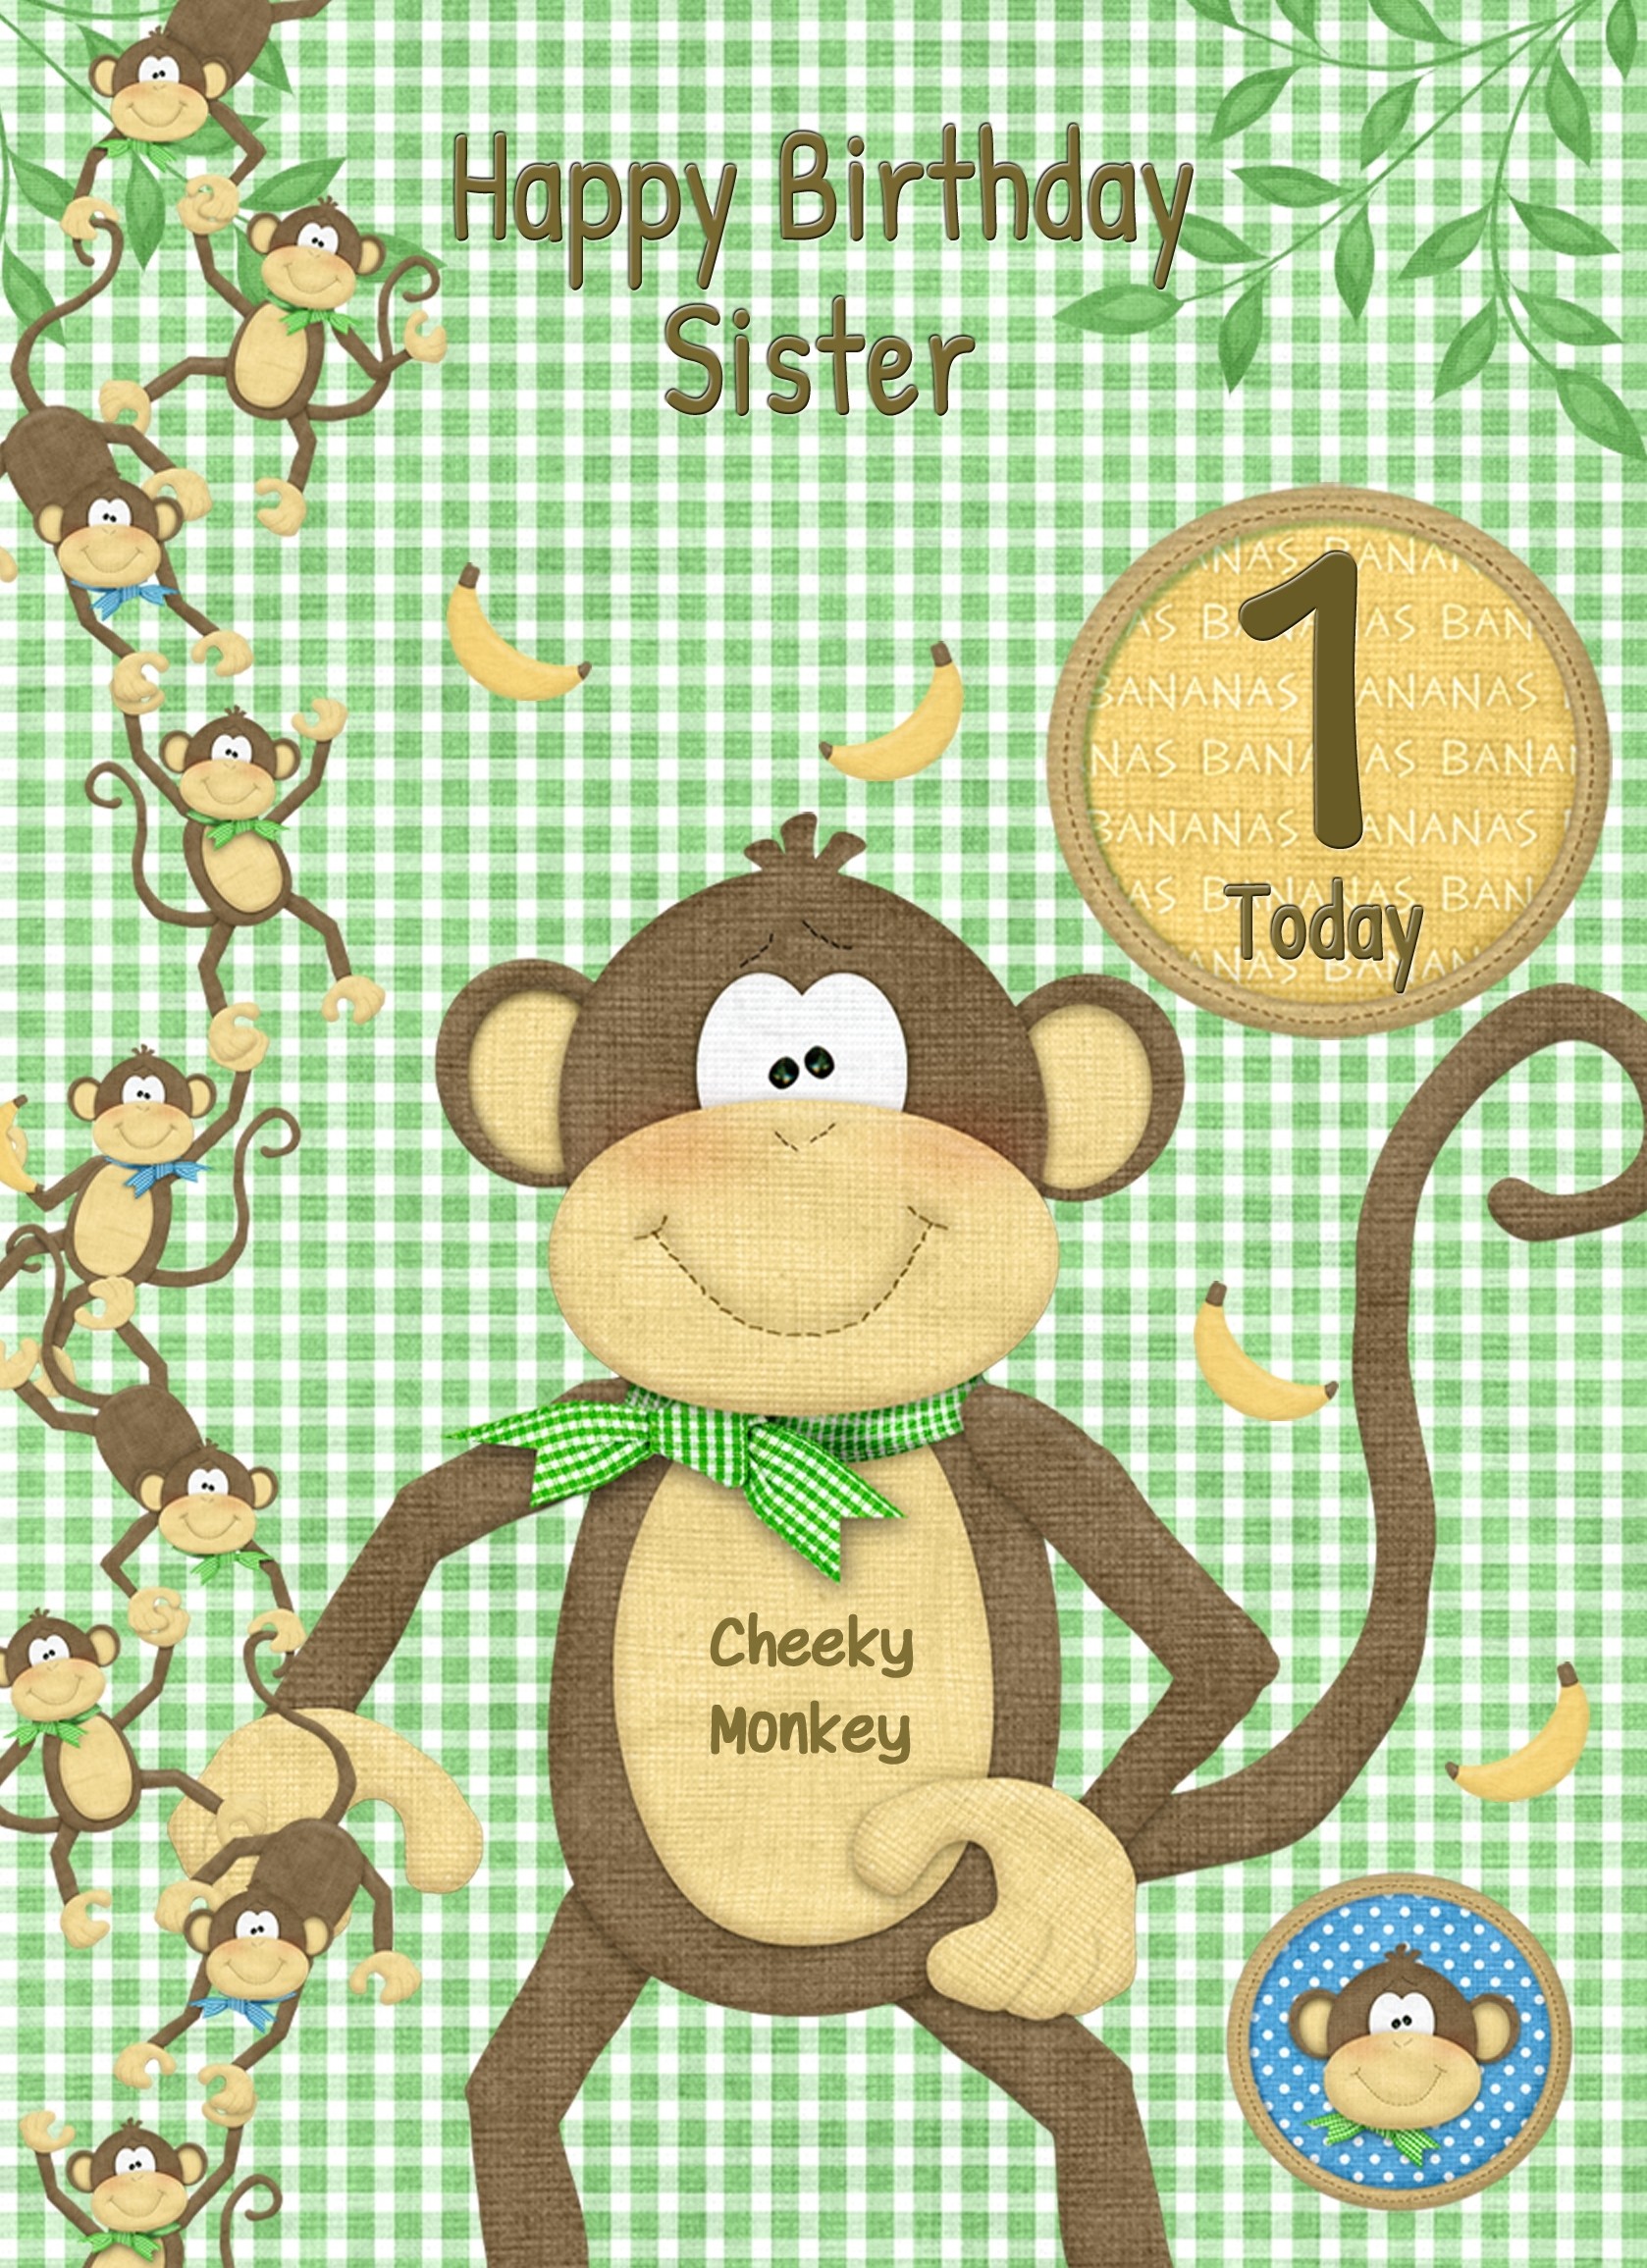 Kids 1st Birthday Cheeky Monkey Cartoon Card for Sister